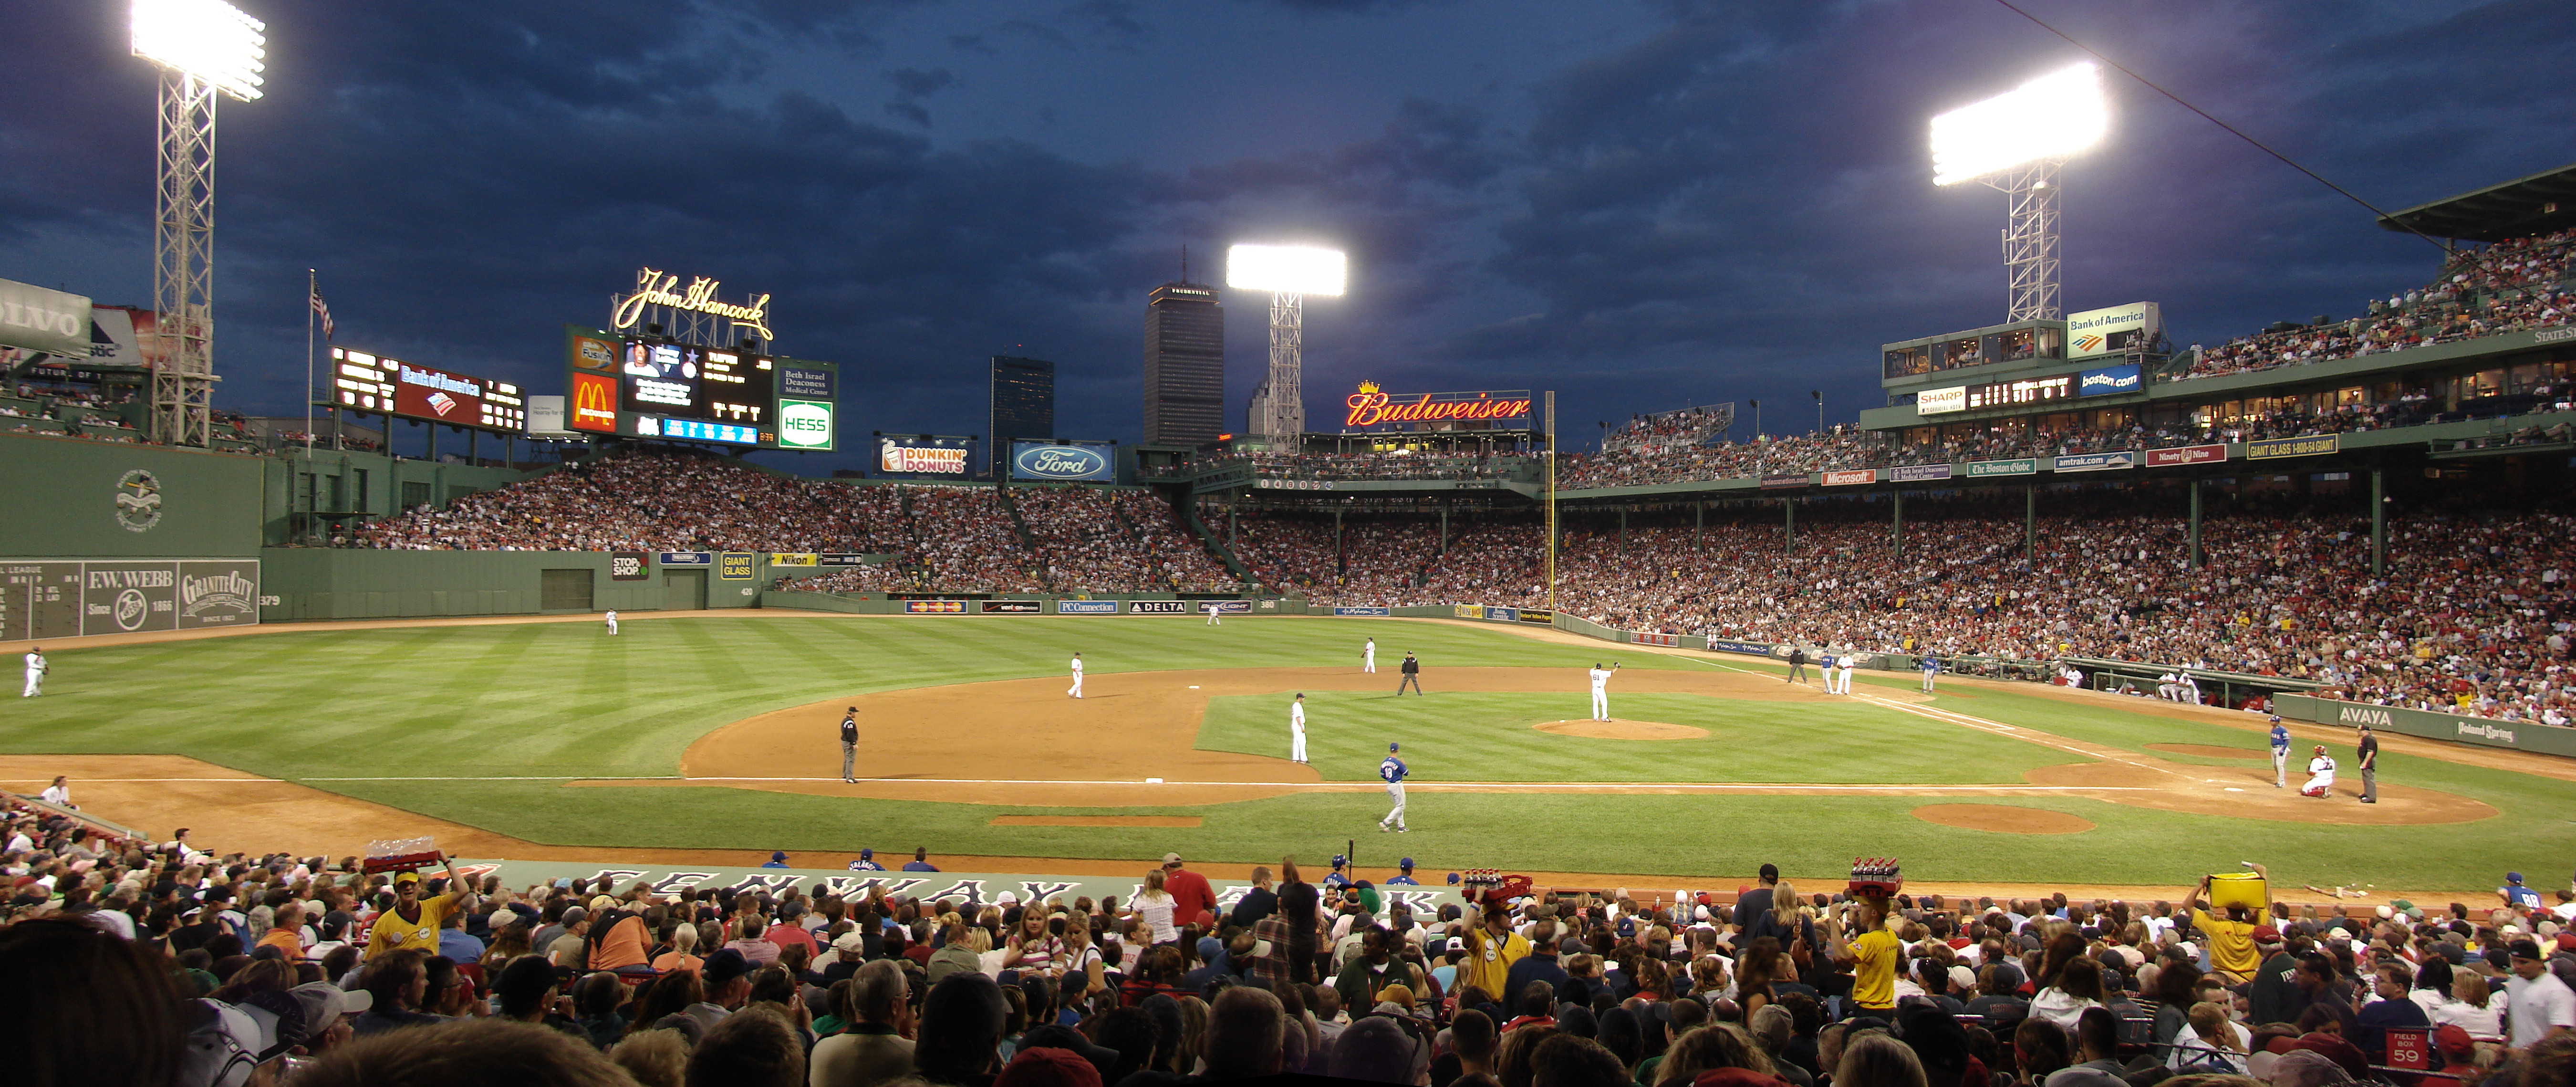 1915 Boston Red Sox season - Wikipedia